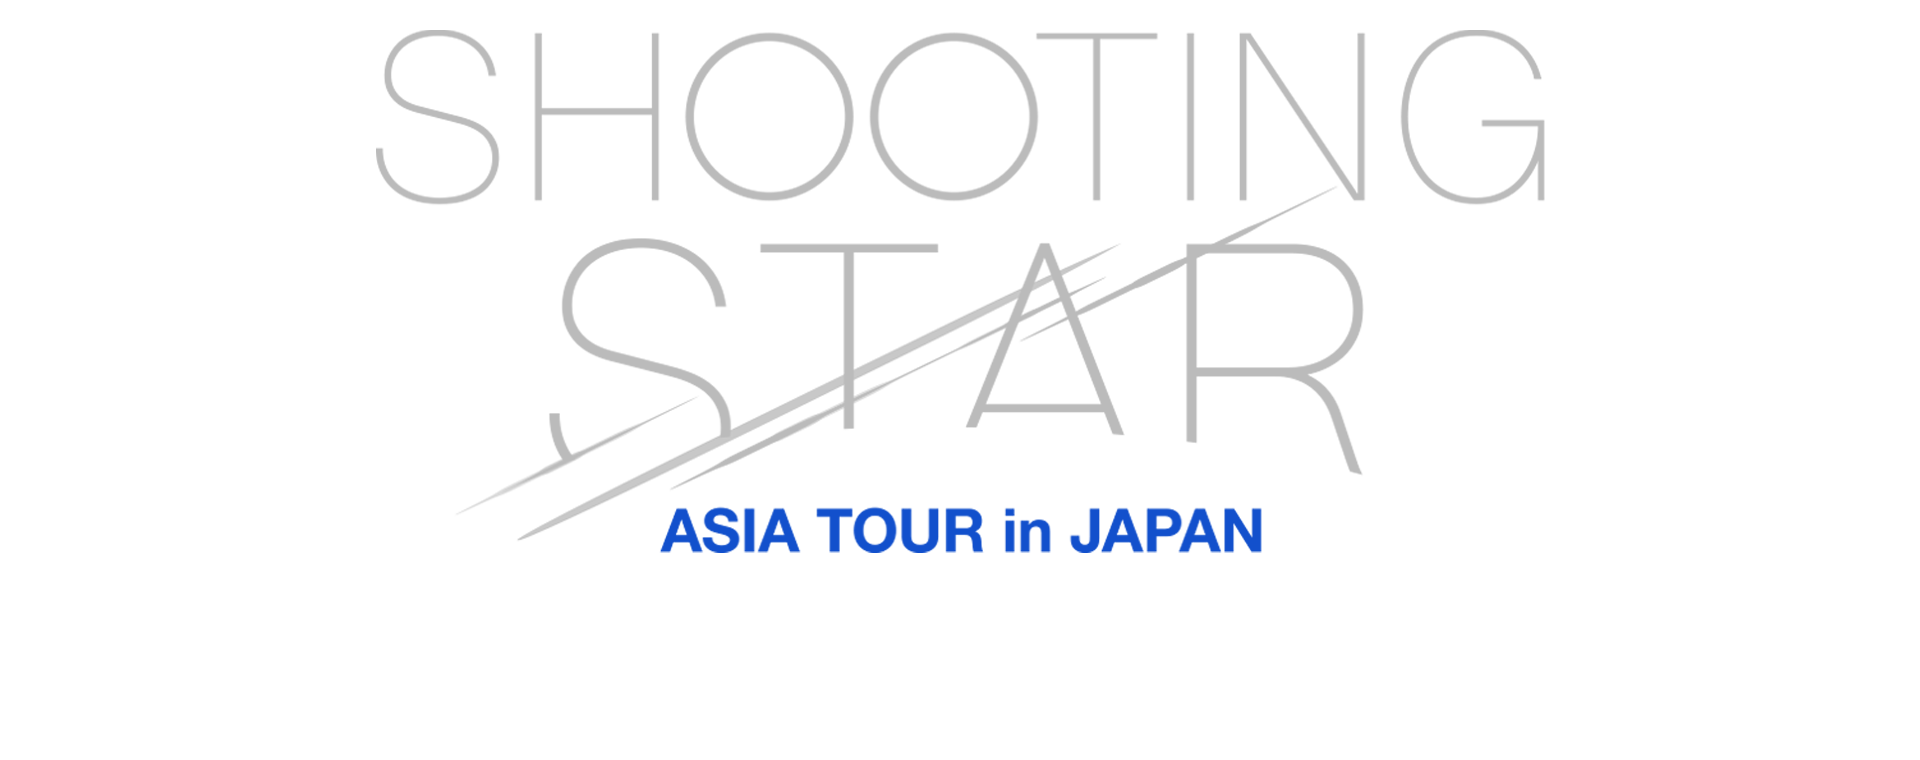 Shooting Star Asia Tour in JAPAN Blu-ray EC STORE